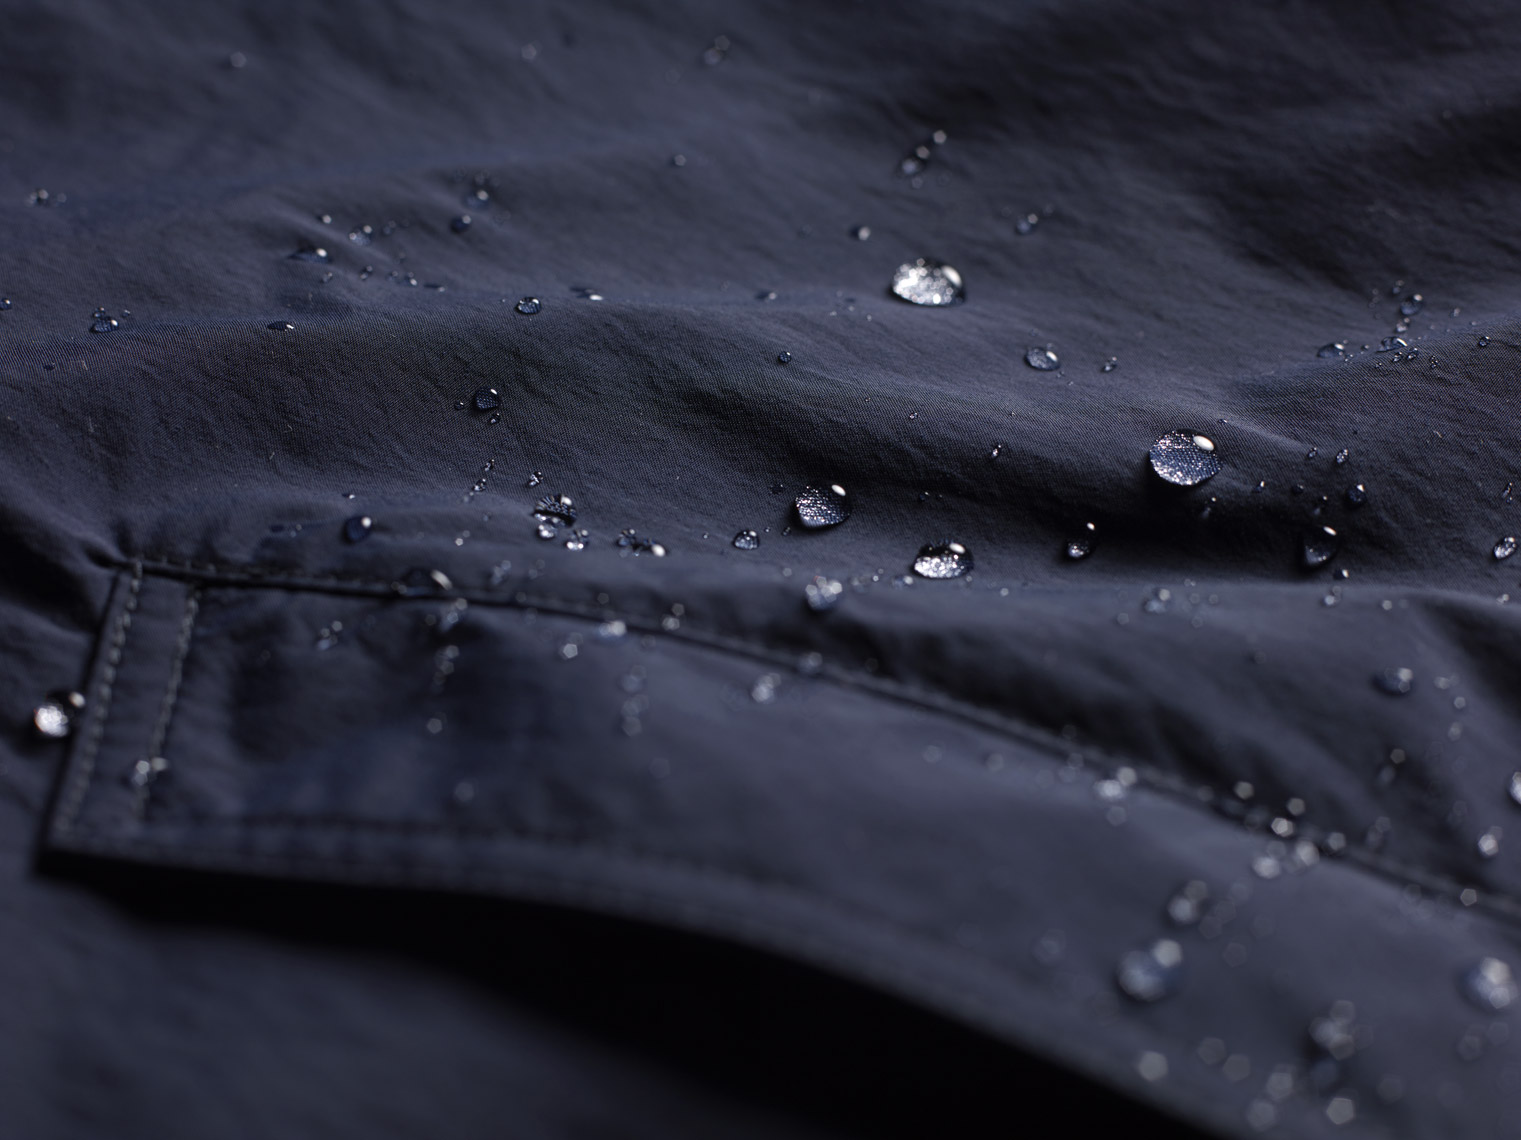 Waterproof Technical fabric